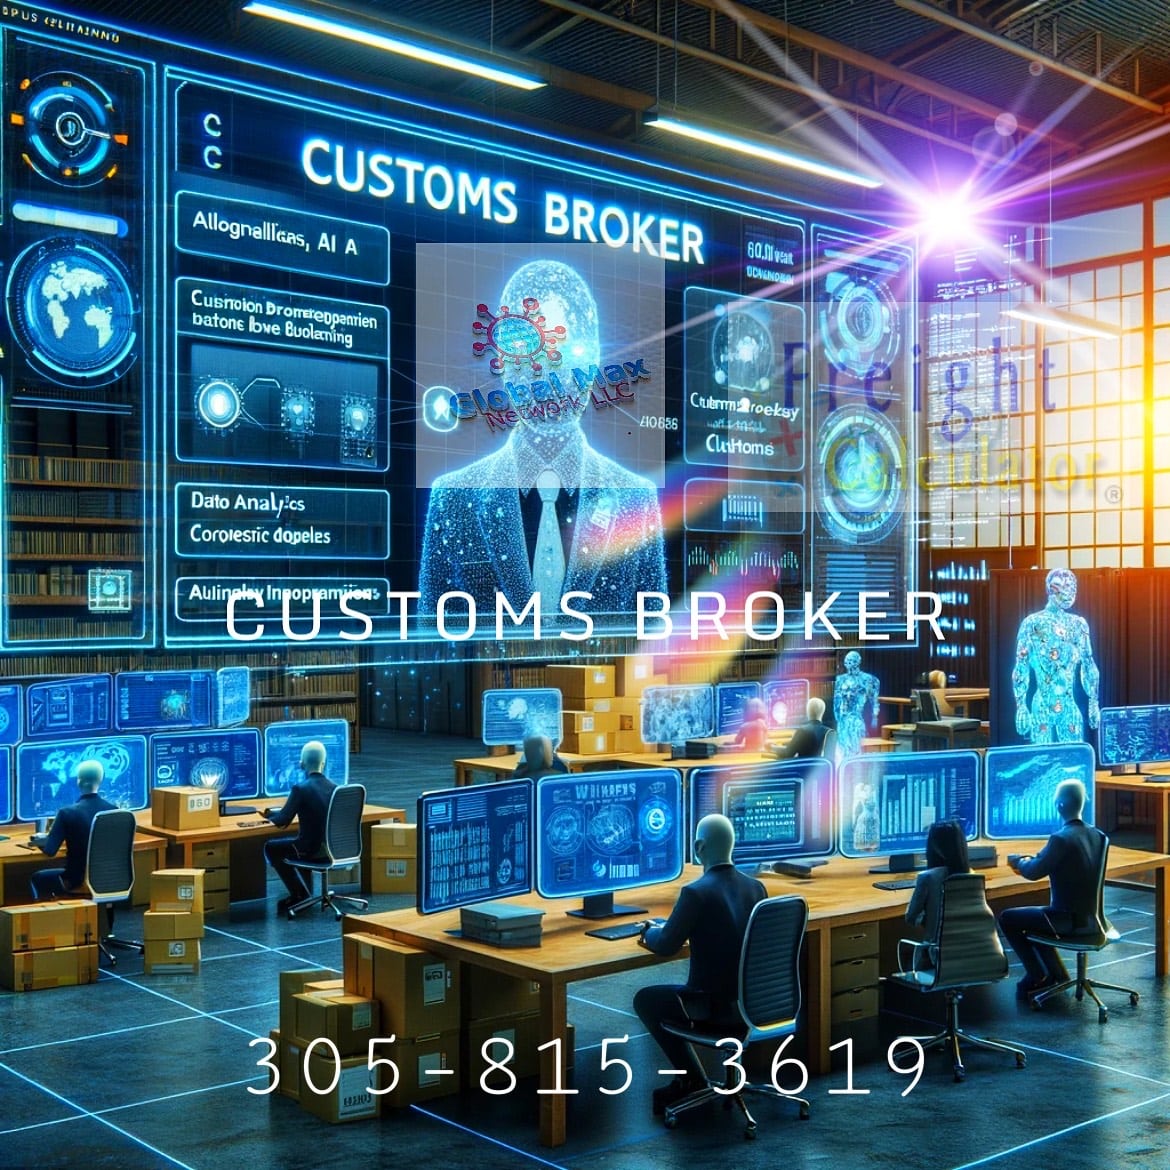 Customs Broker Services